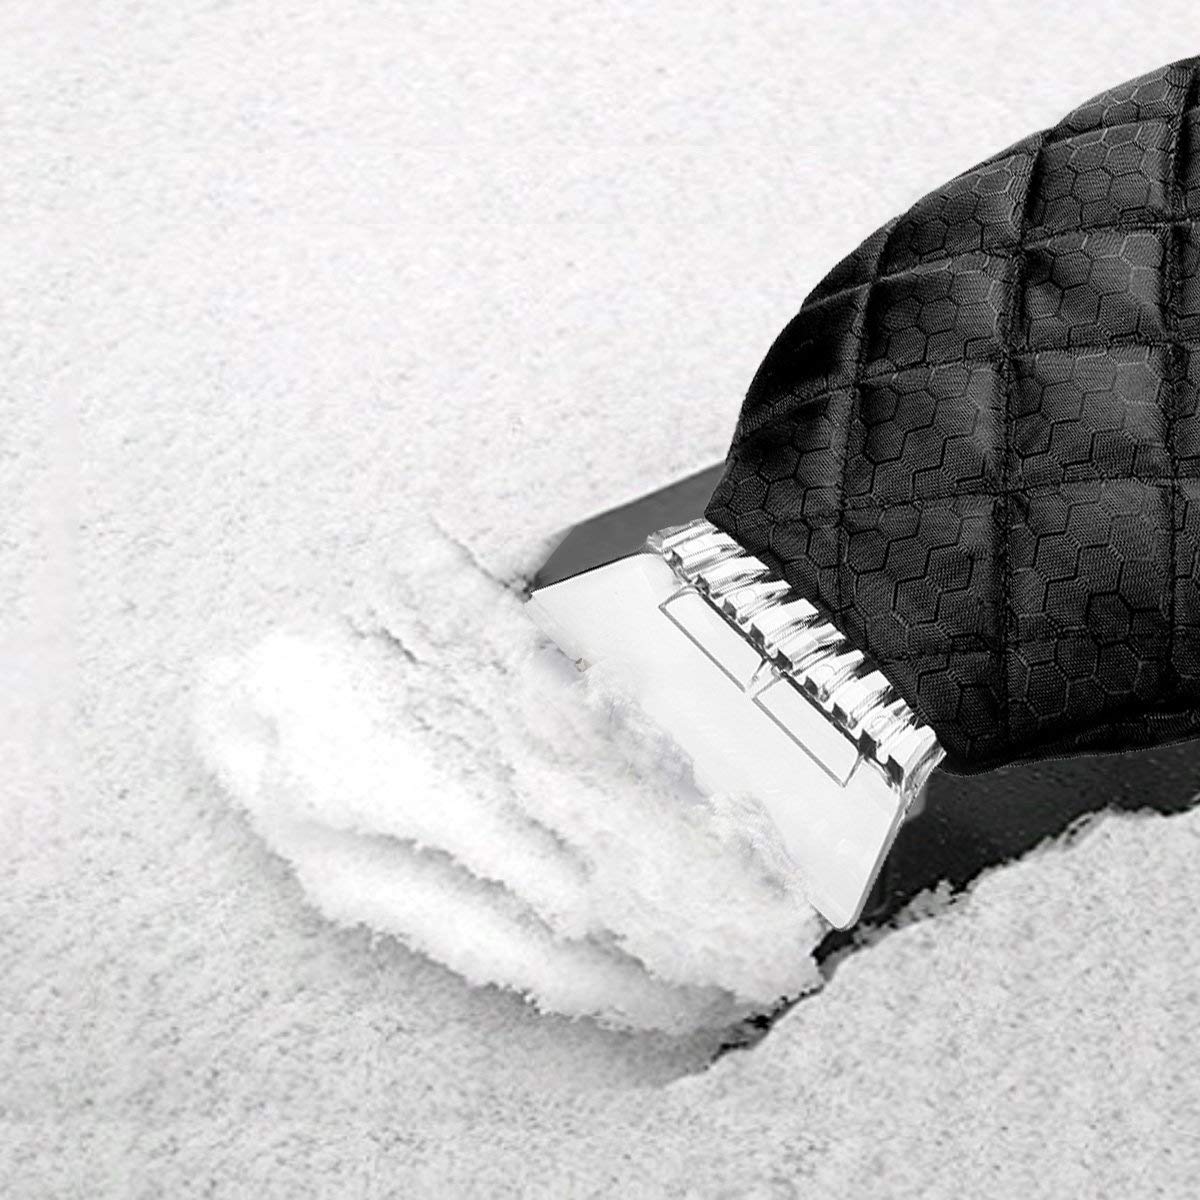 MPG Snow & Ice Scraper Glove